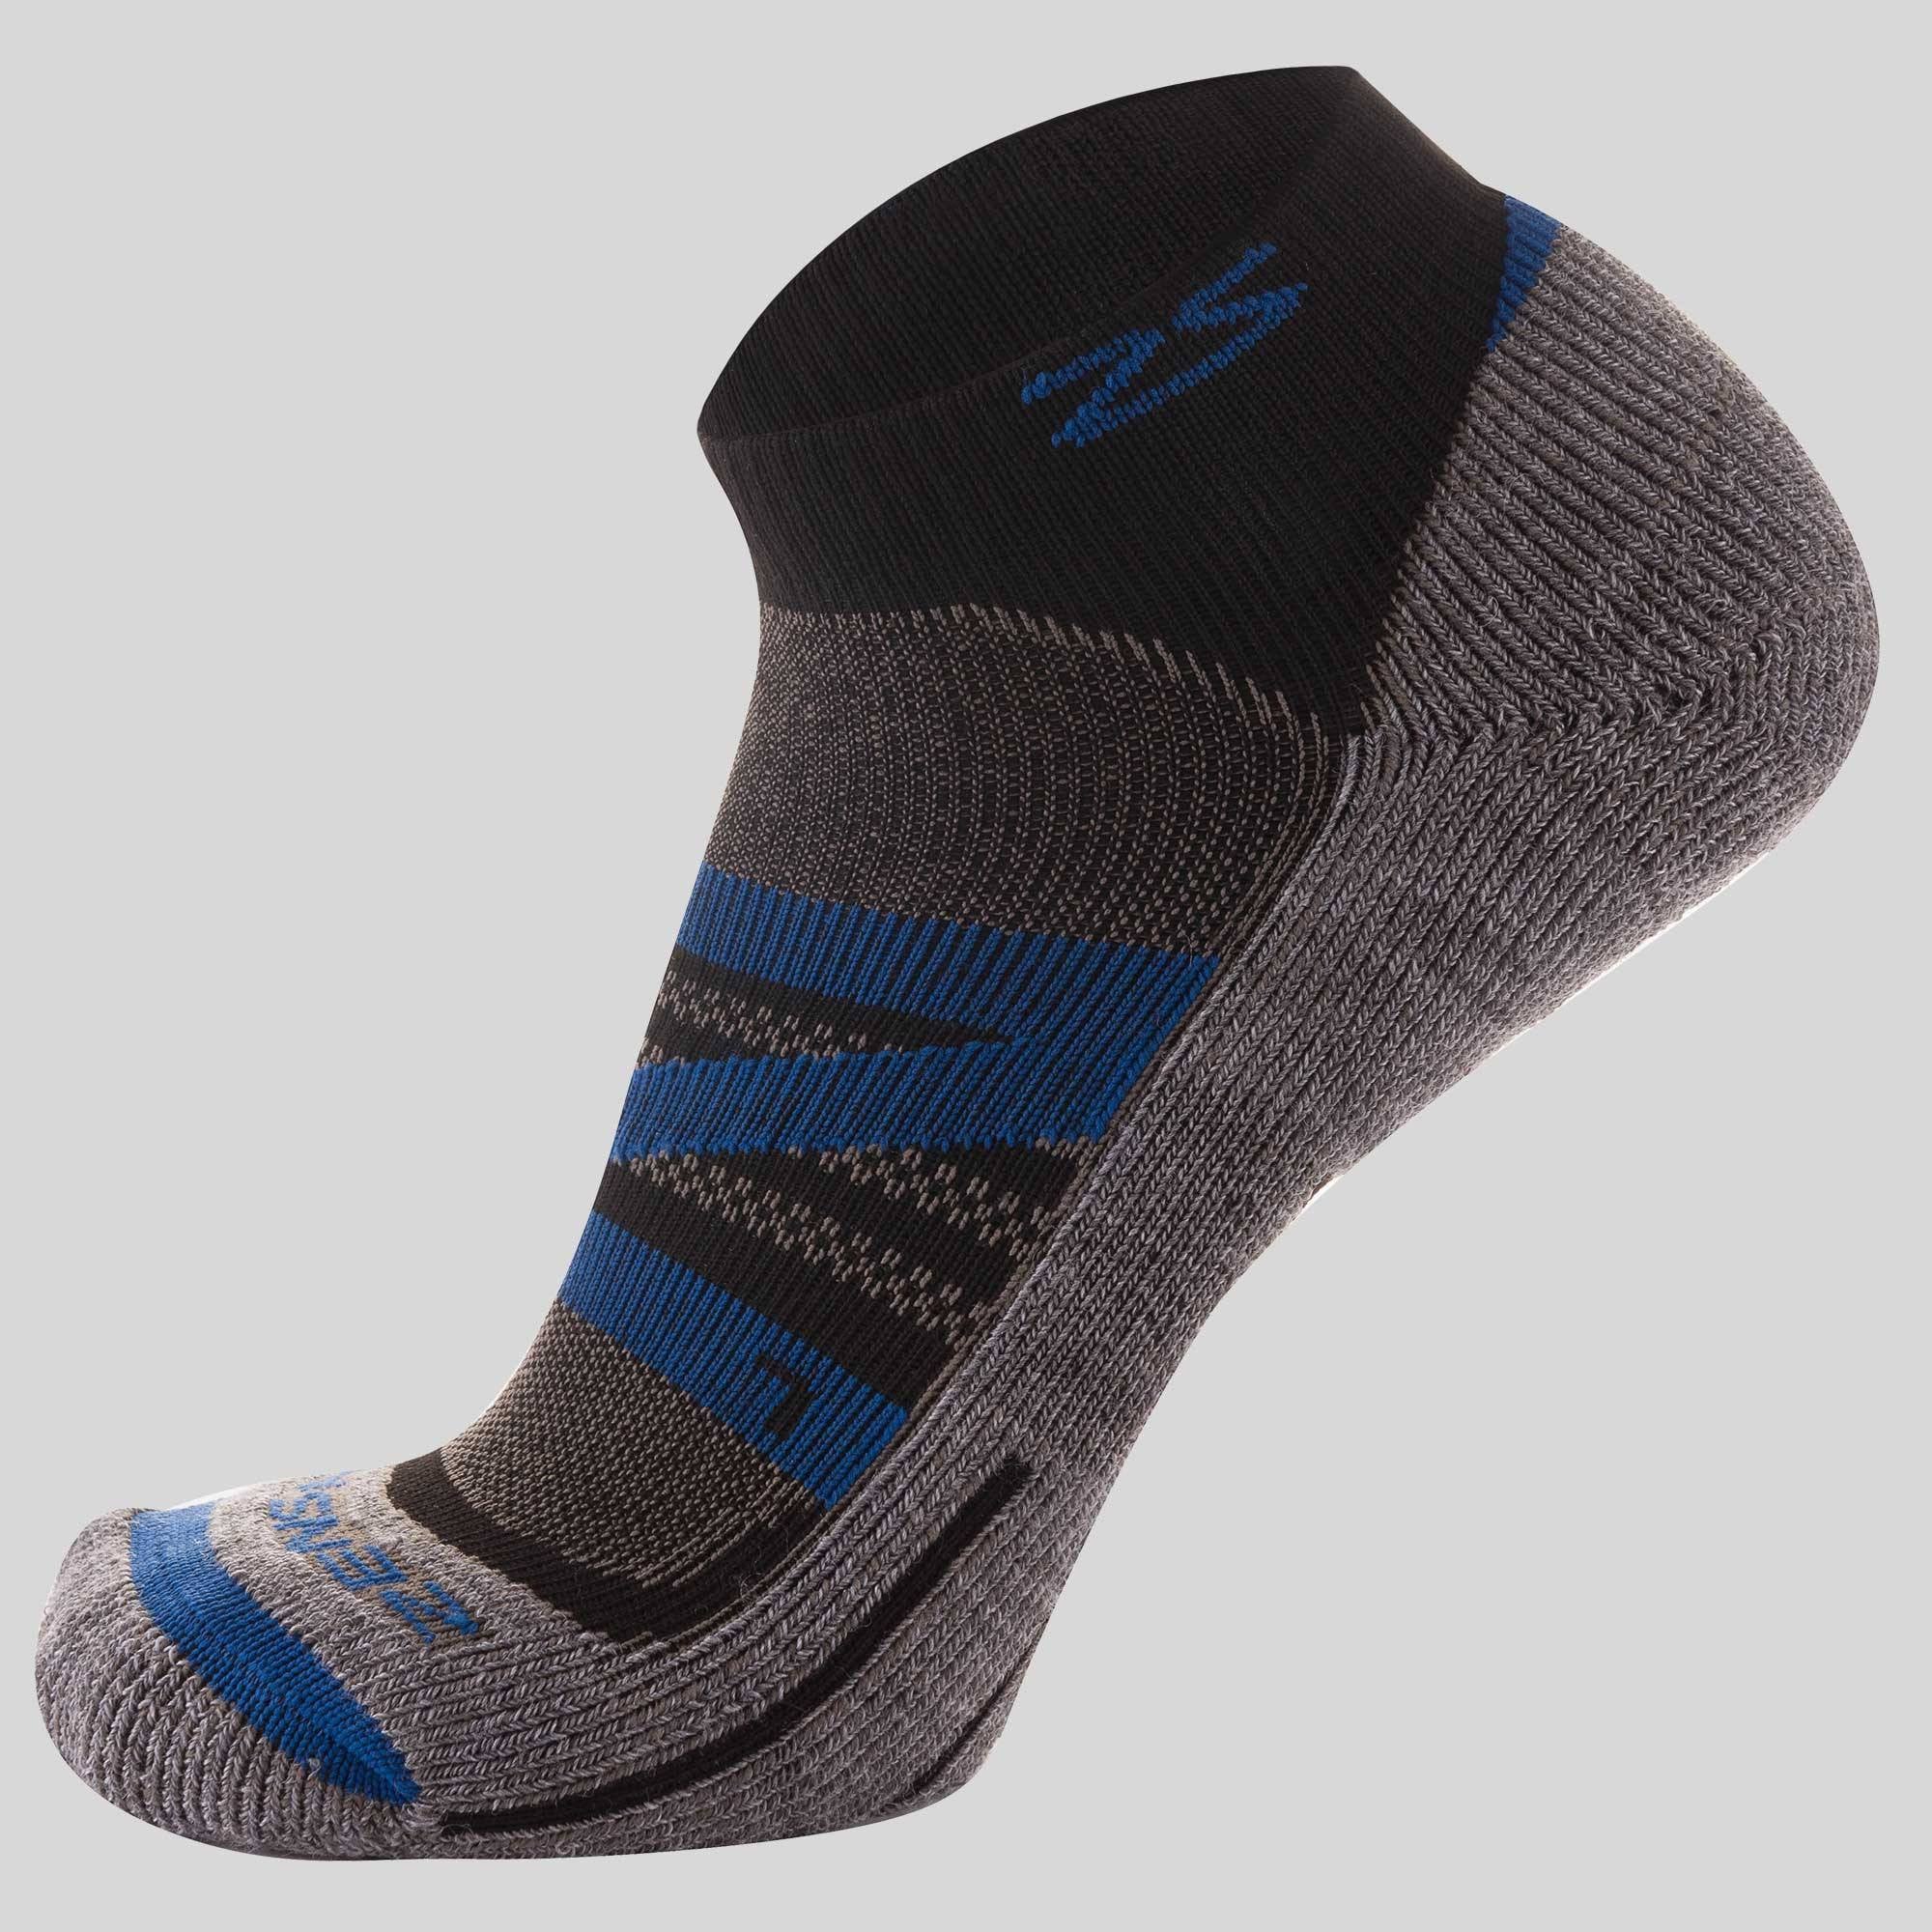 Wool Running Socks - Best Comfortable 